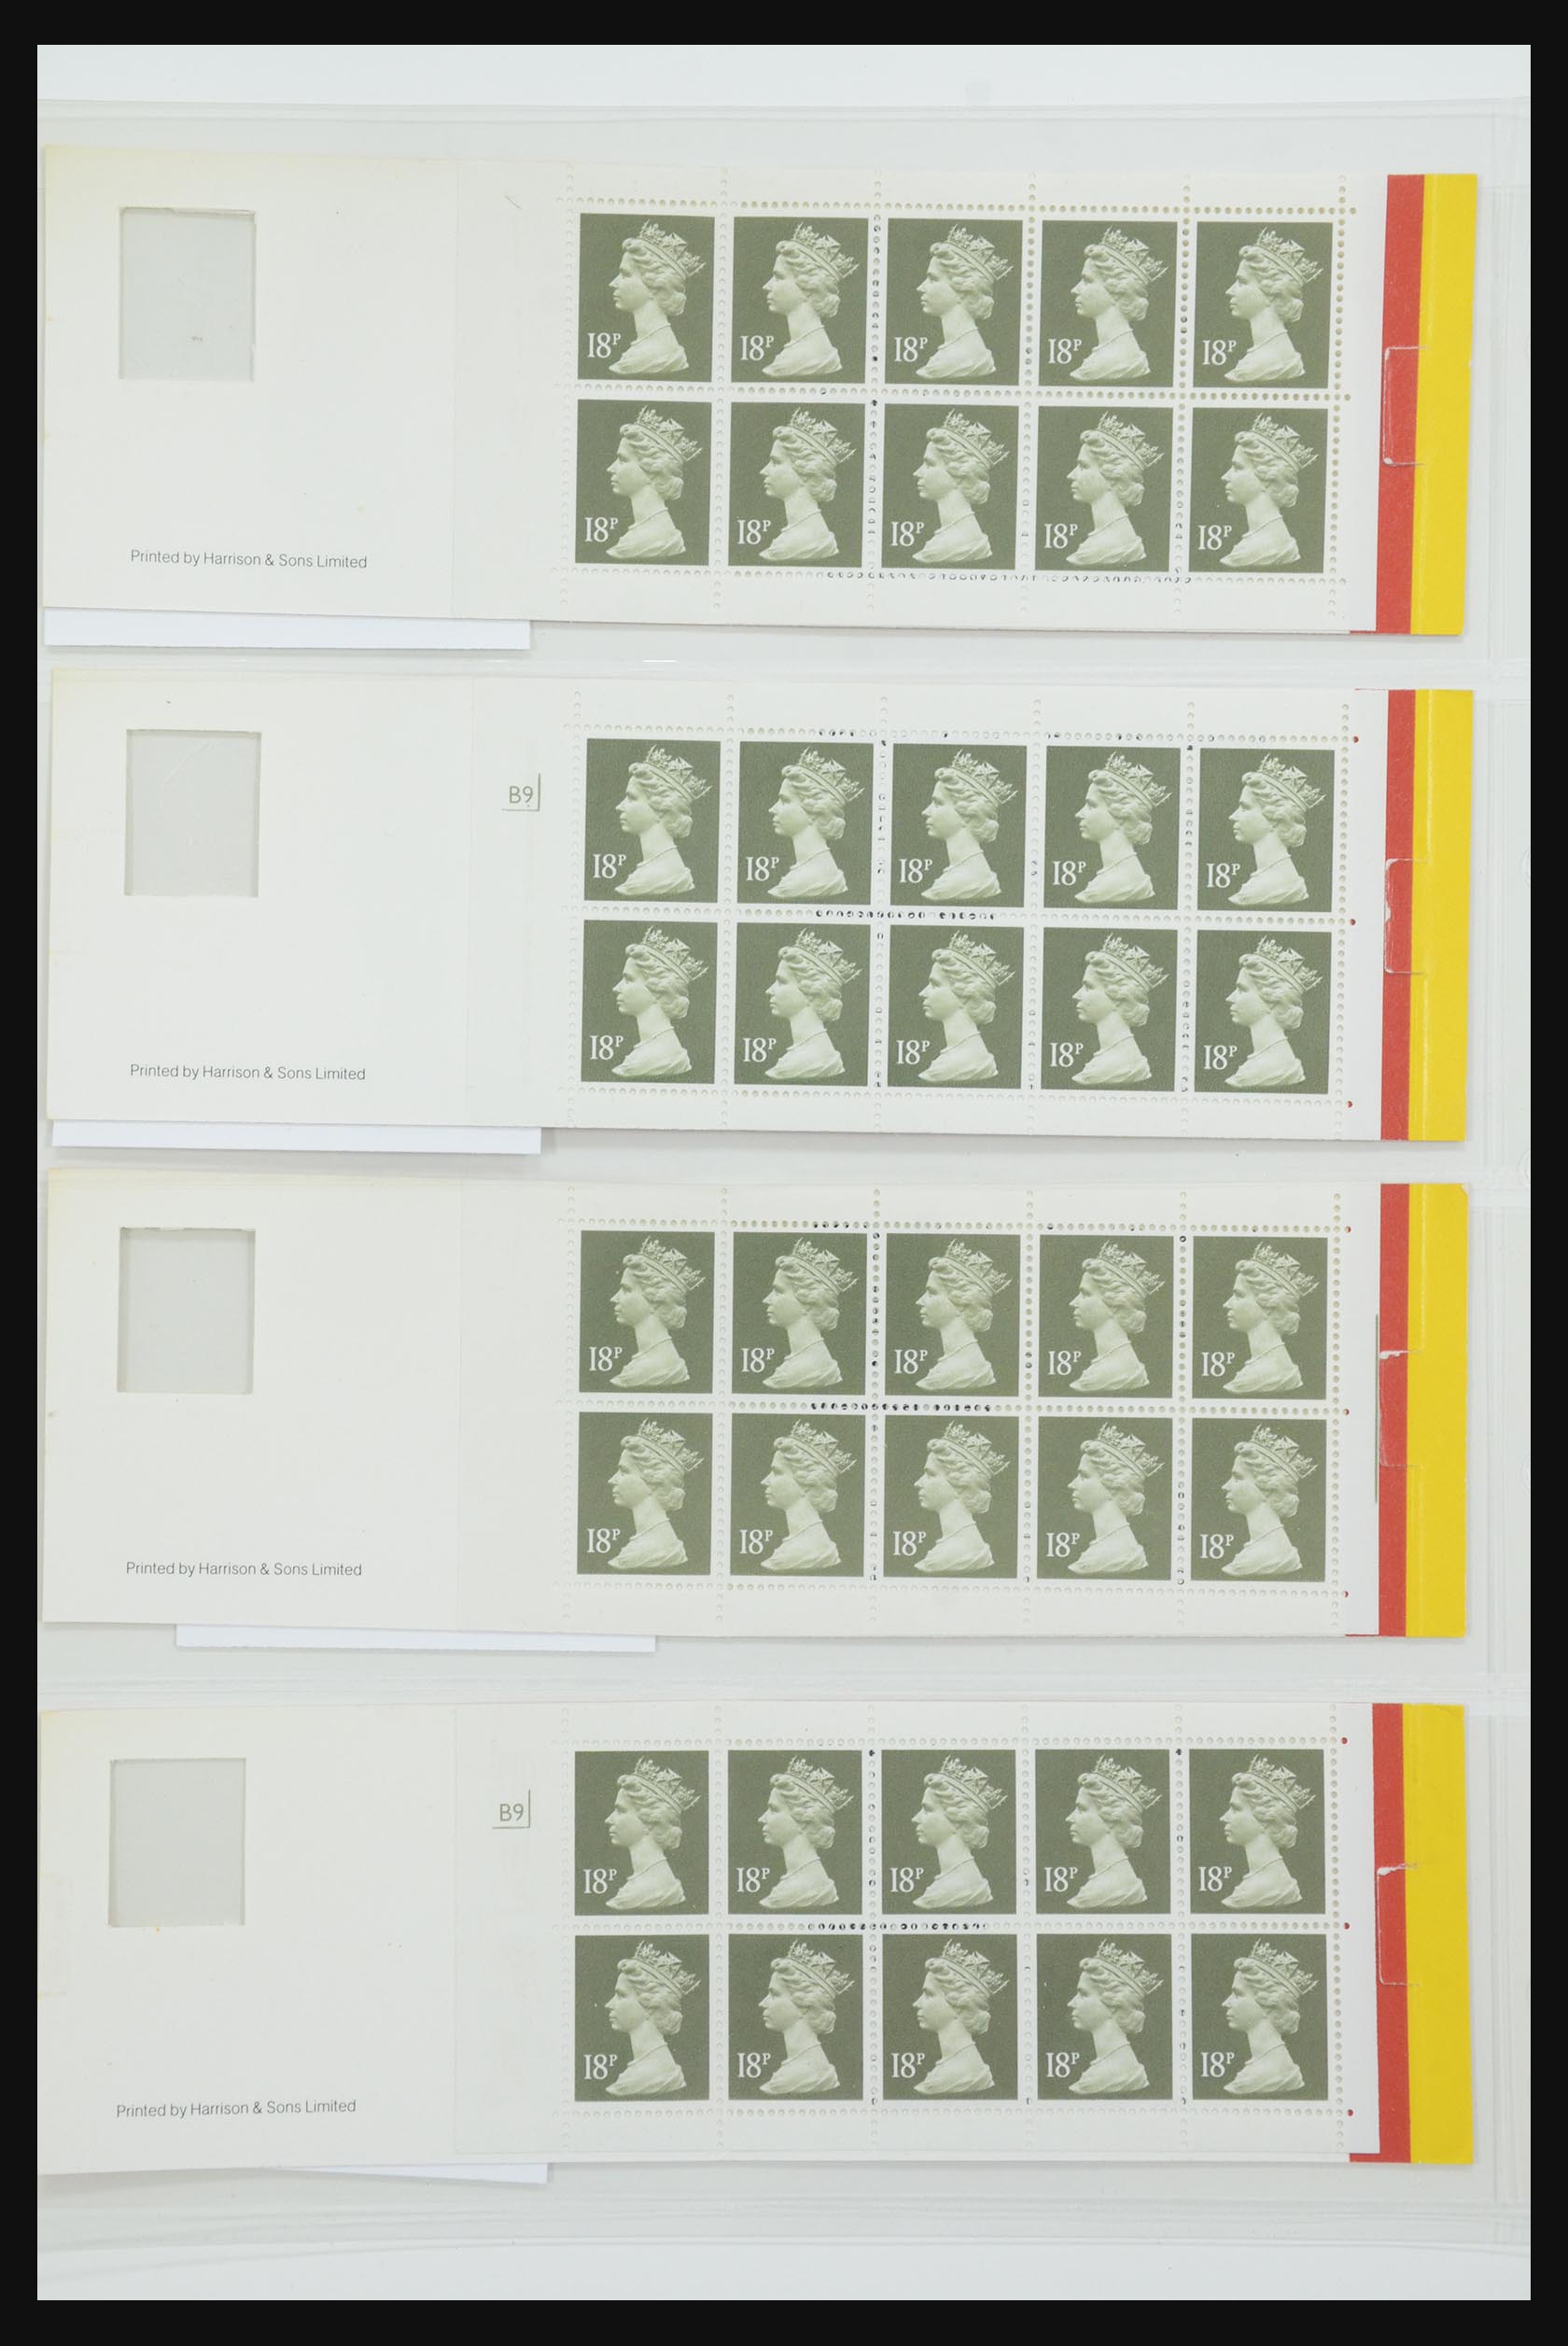 31959 066 - 31959 Great Britain stampbooklets 1987-2016!!